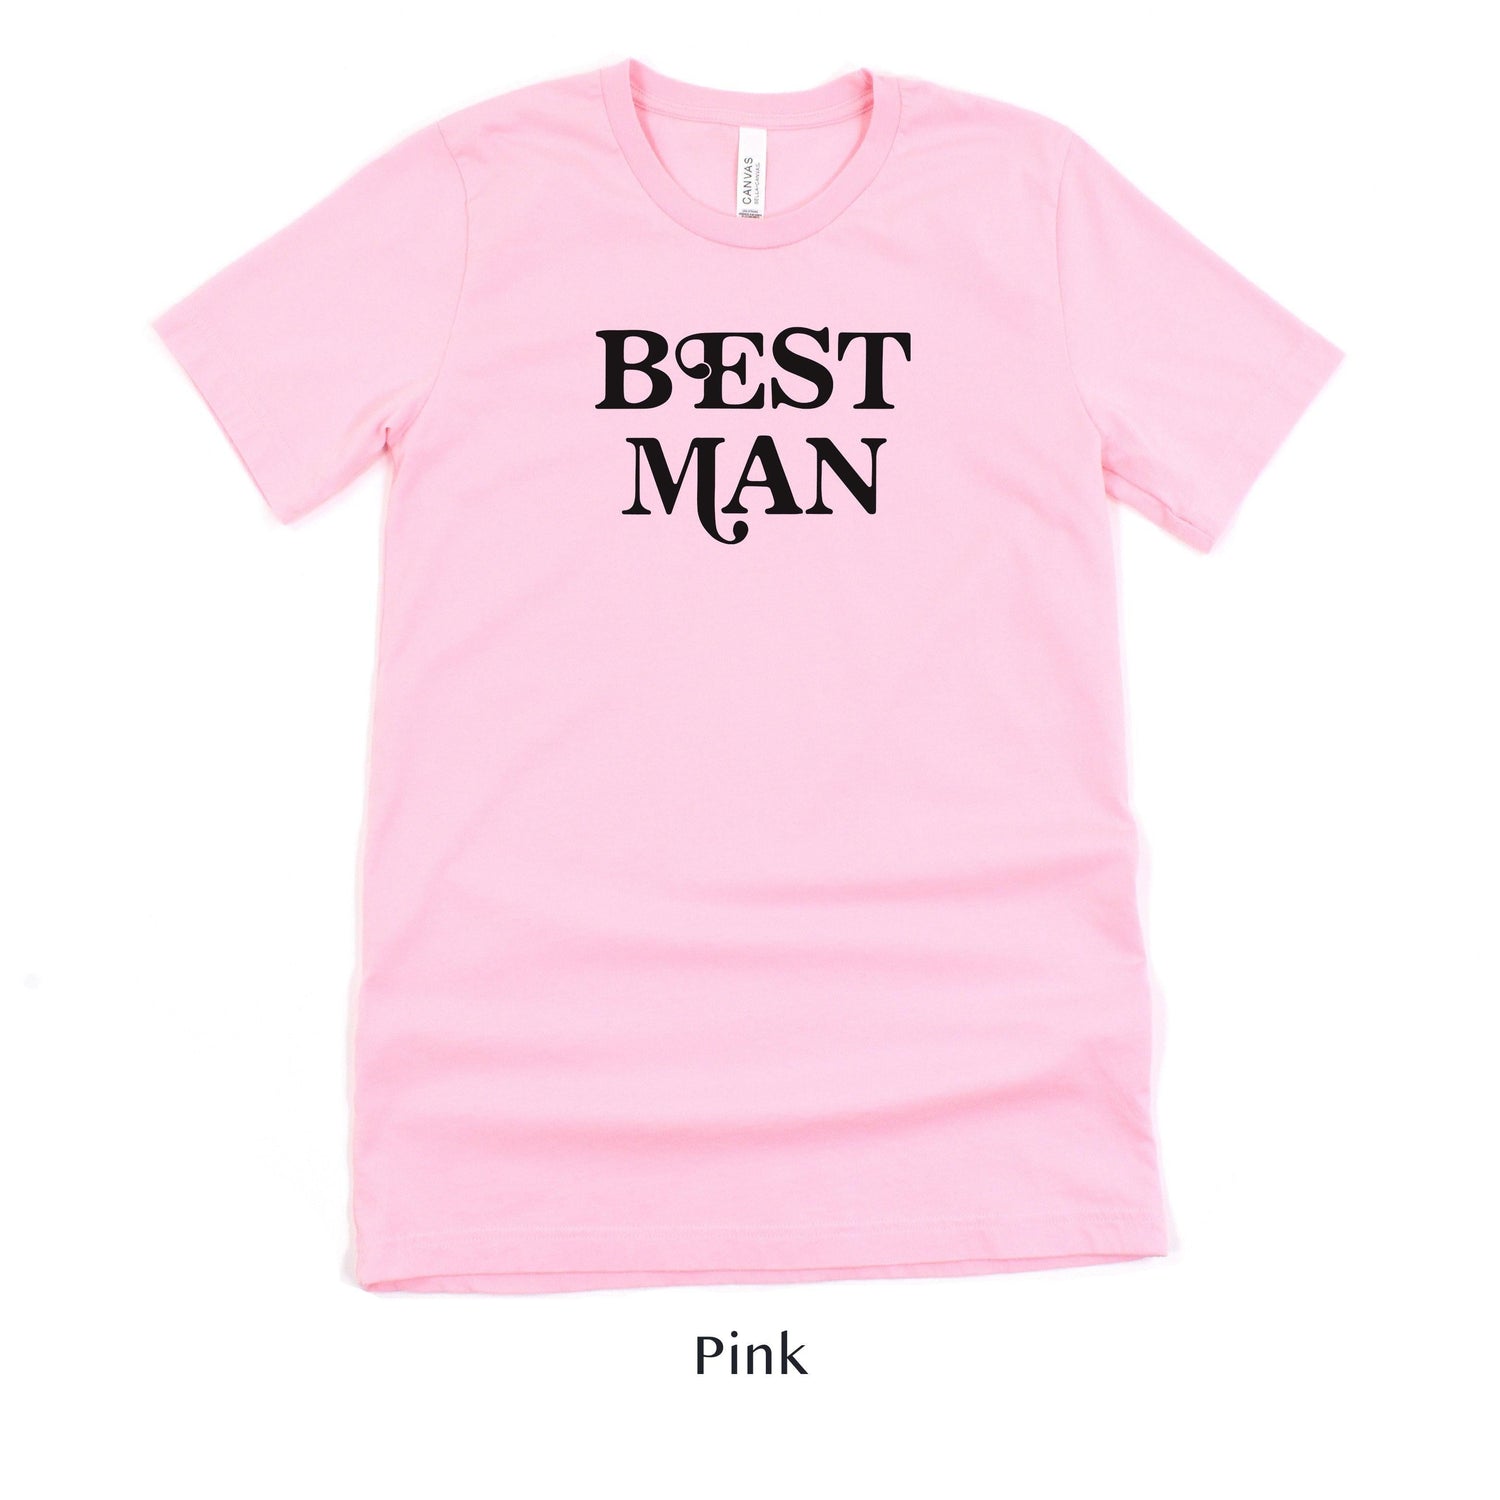 Best Man Retro Short-sleeve Tee by Oaklynn Lane - Pink Shirt